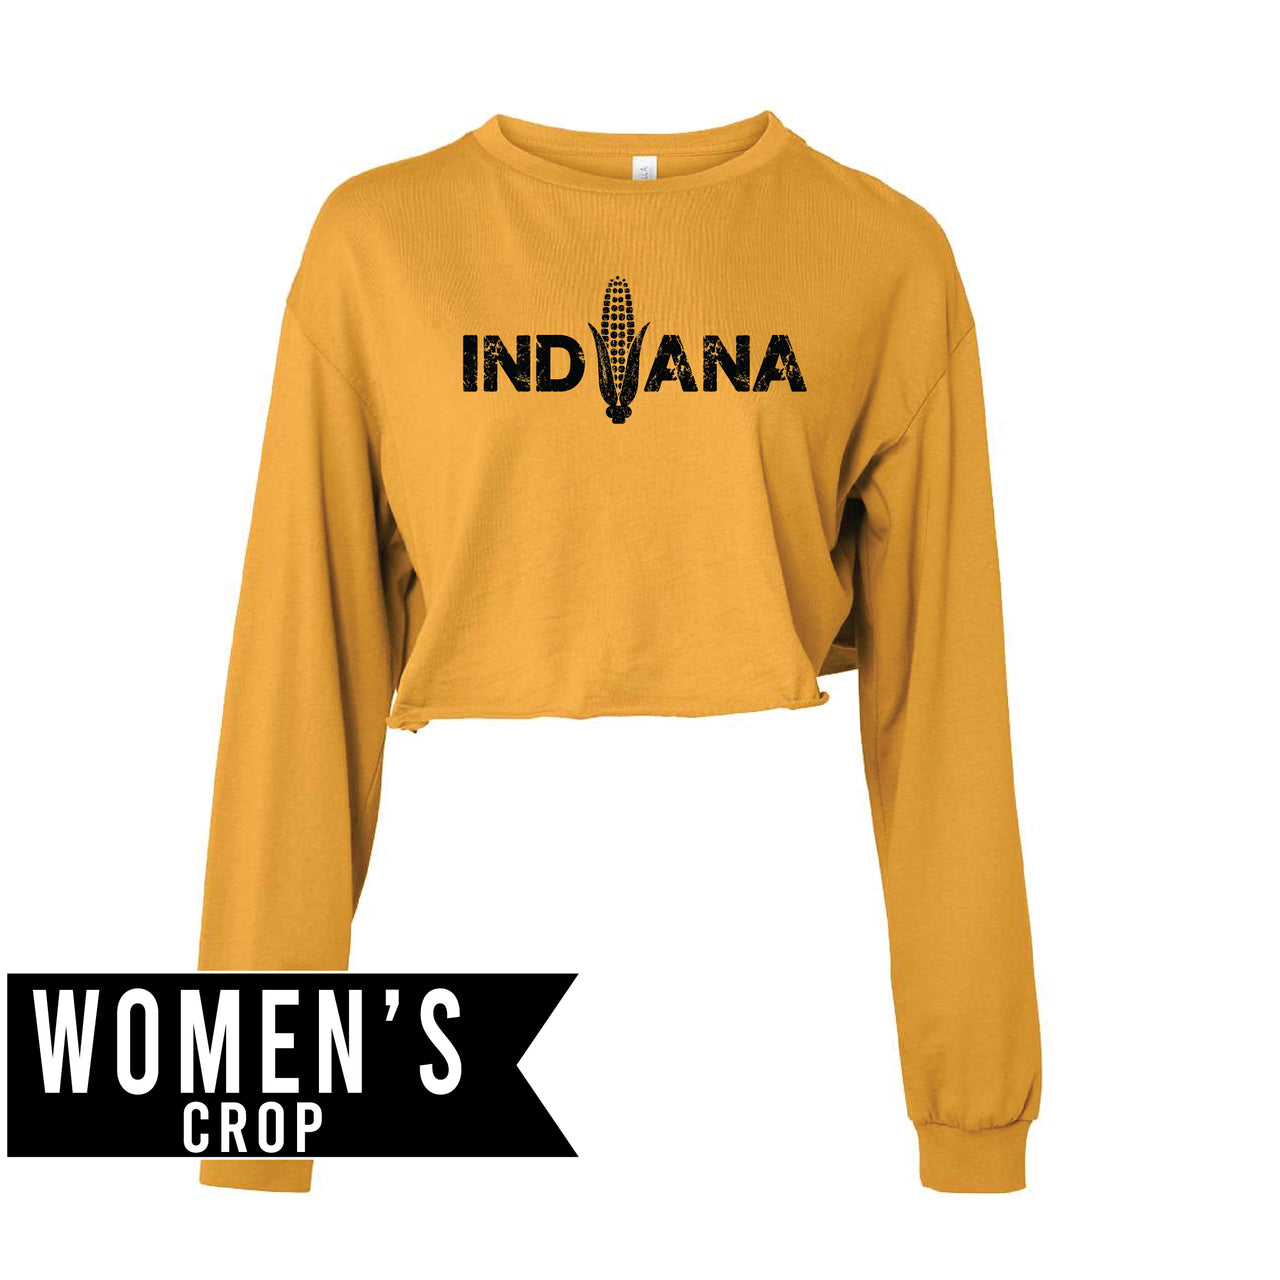 Fashion Women's Crop Long Sleeve Tee - Indiana Corn